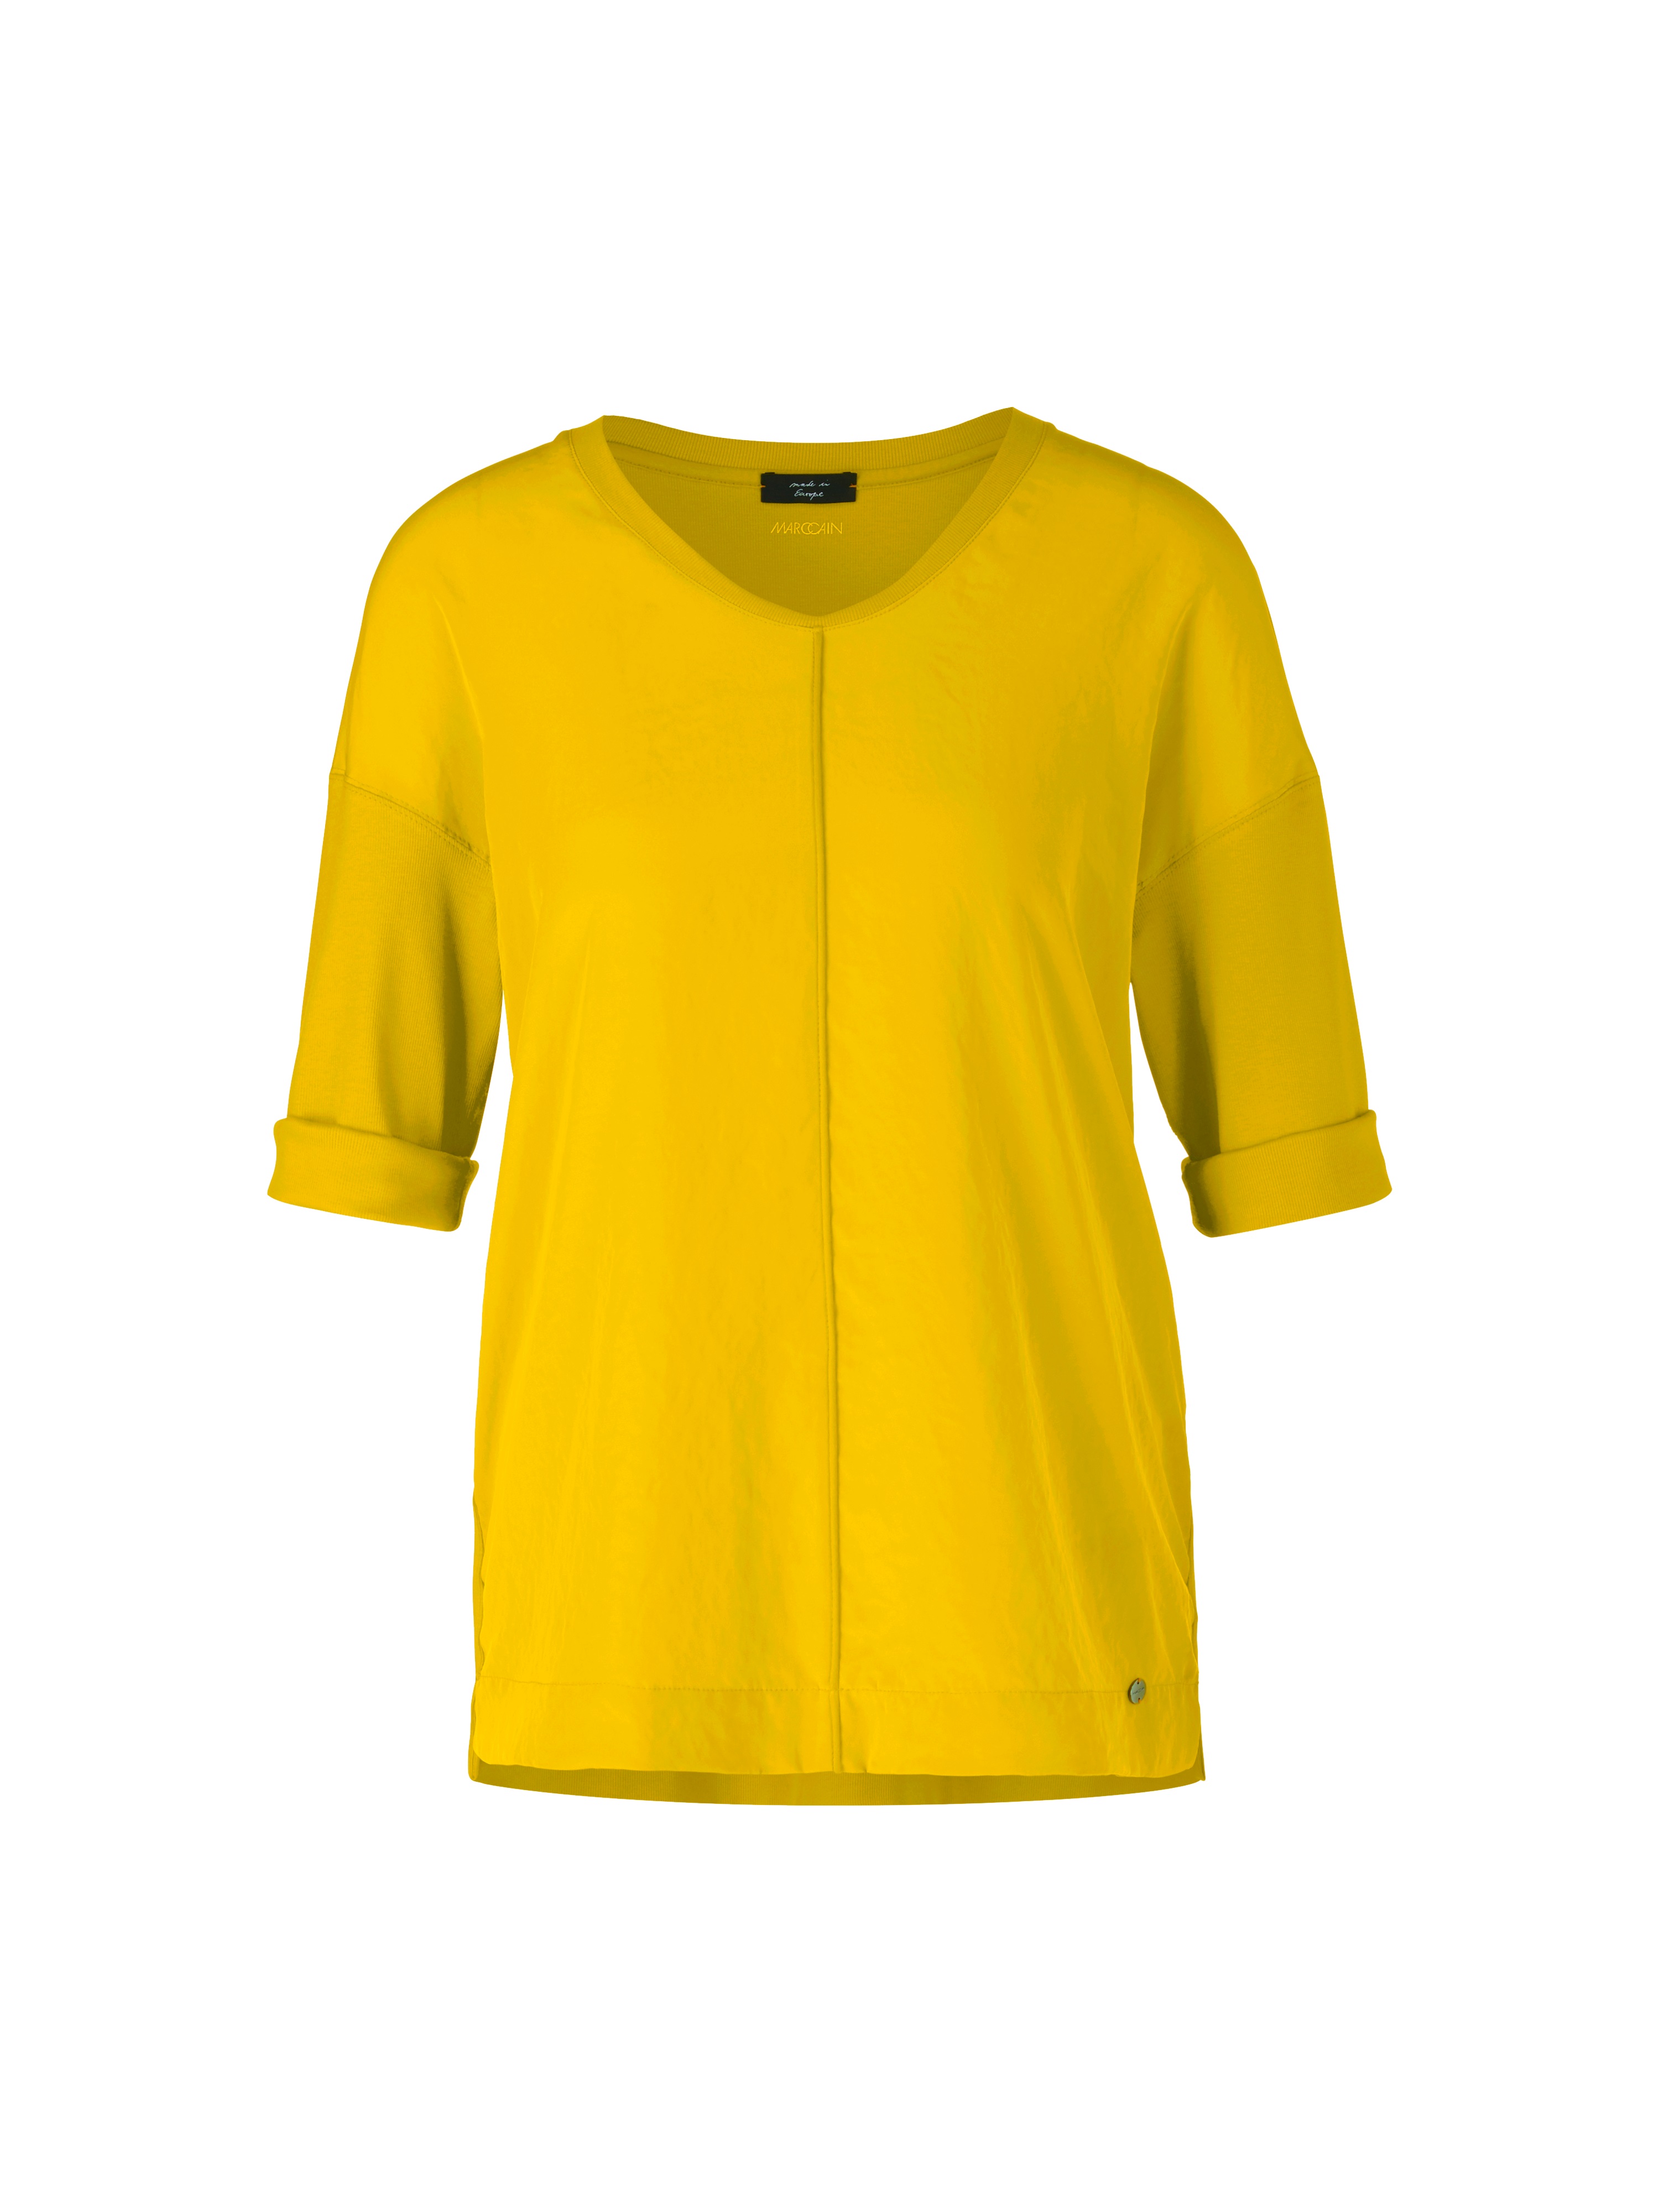 MARC CAIN WA 55.01 J29 Blusenshirt gelb bright sulphur